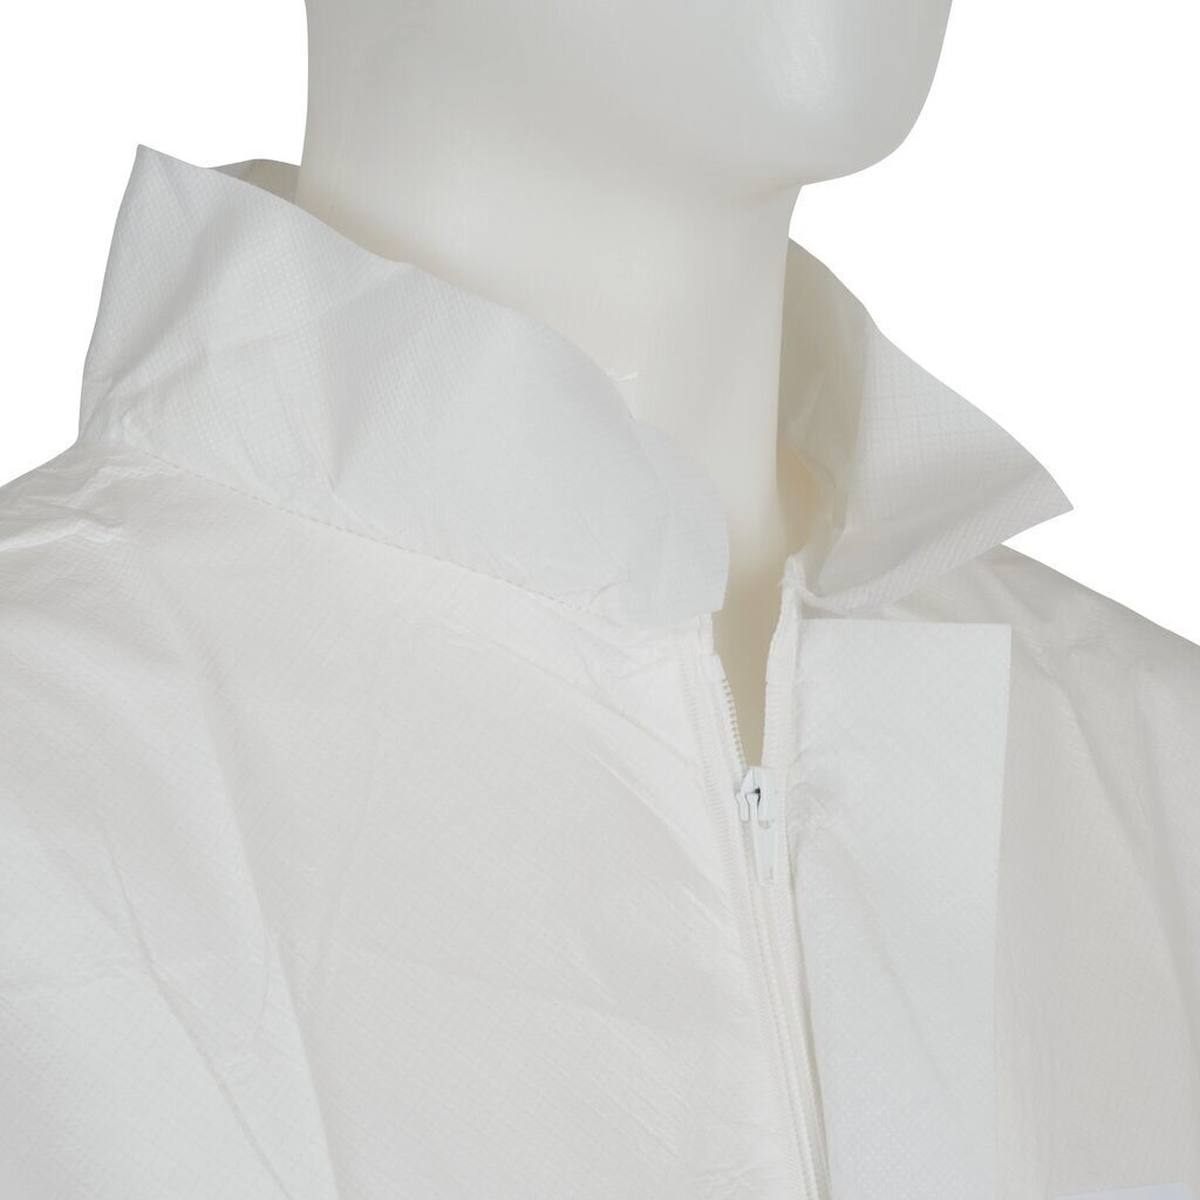 Abrigo 3M 4440, blanco, talla S, especialmente transpirable, muy ligero, con cremallera, puños de punto